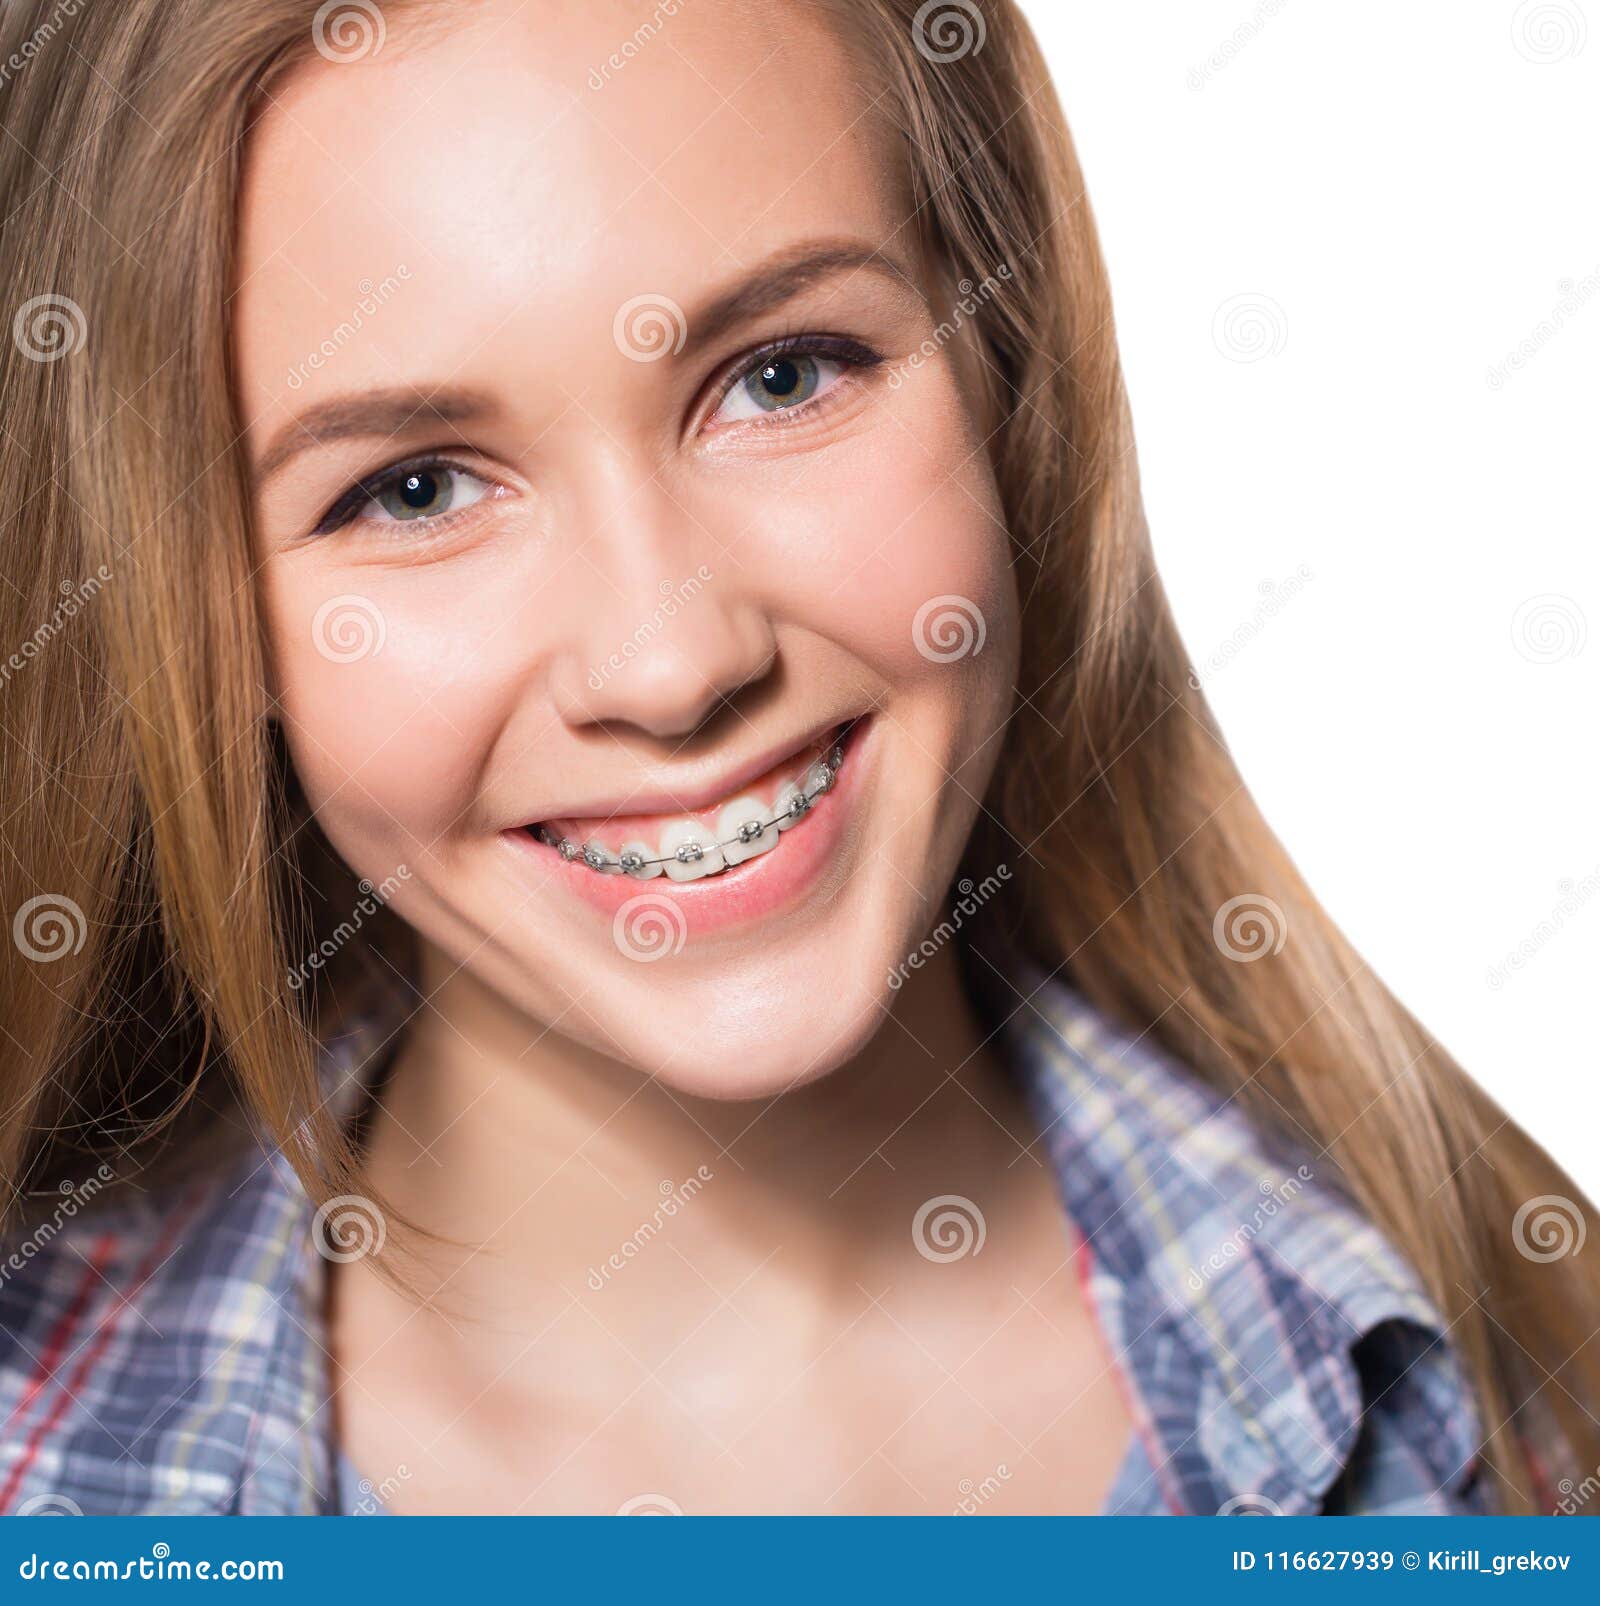 Portrait of Teen Girl Showing Dental Braces. Stock Image - Image of ...